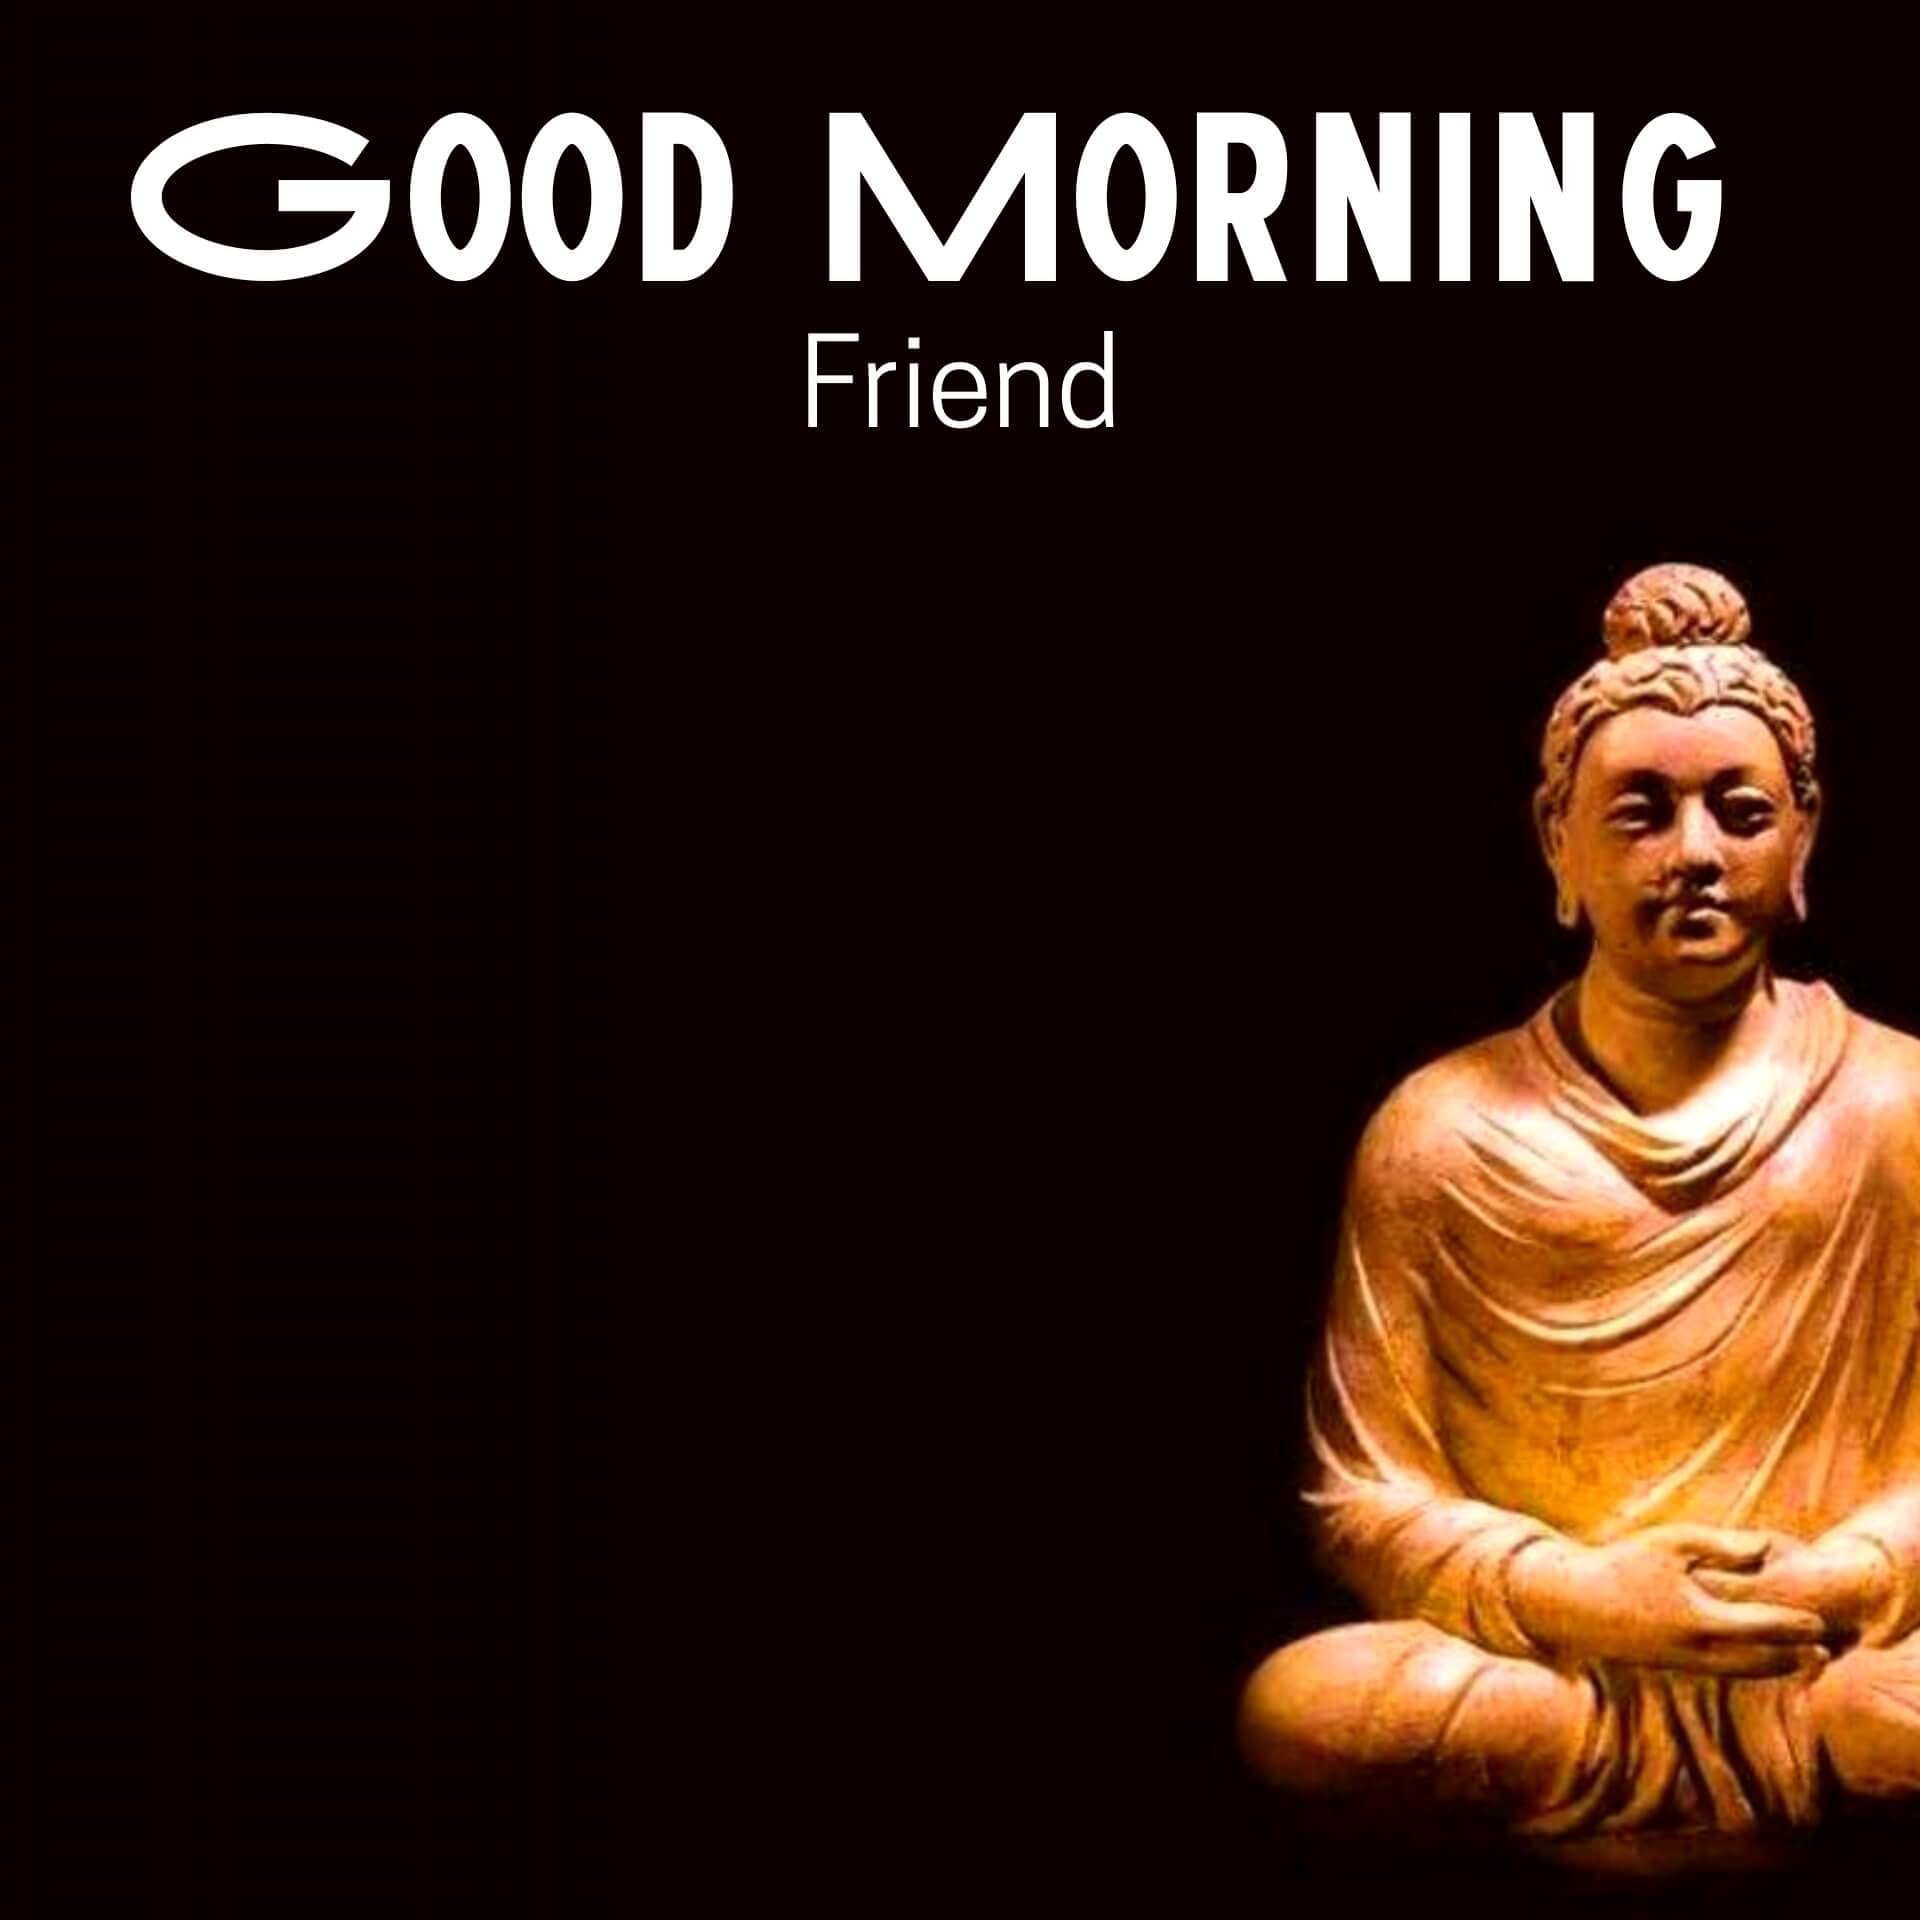 Gautam Buddha Good Morning Images